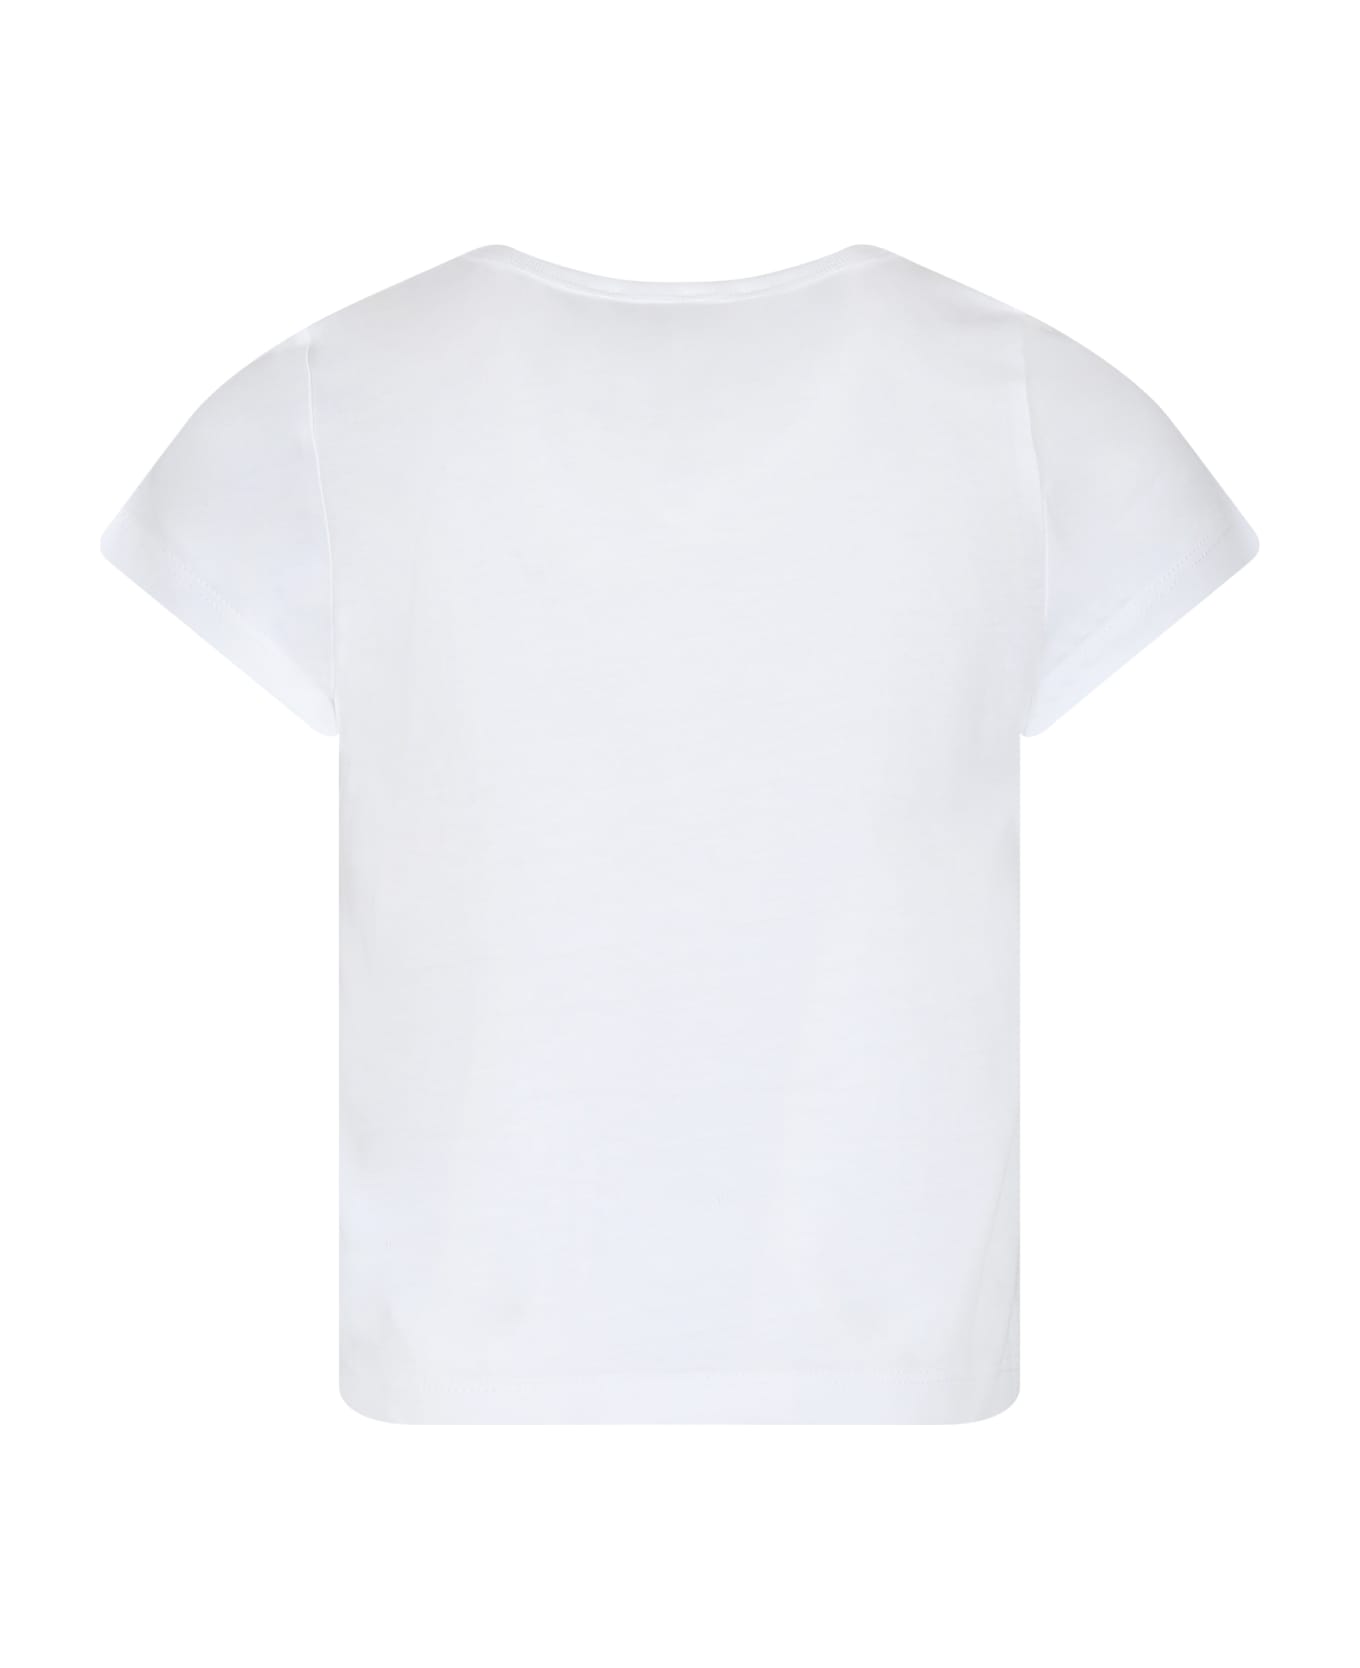 Rykiel Enfant White T-shirt For Girl With Tour Eiffel Print And Rhinestones - Ivory